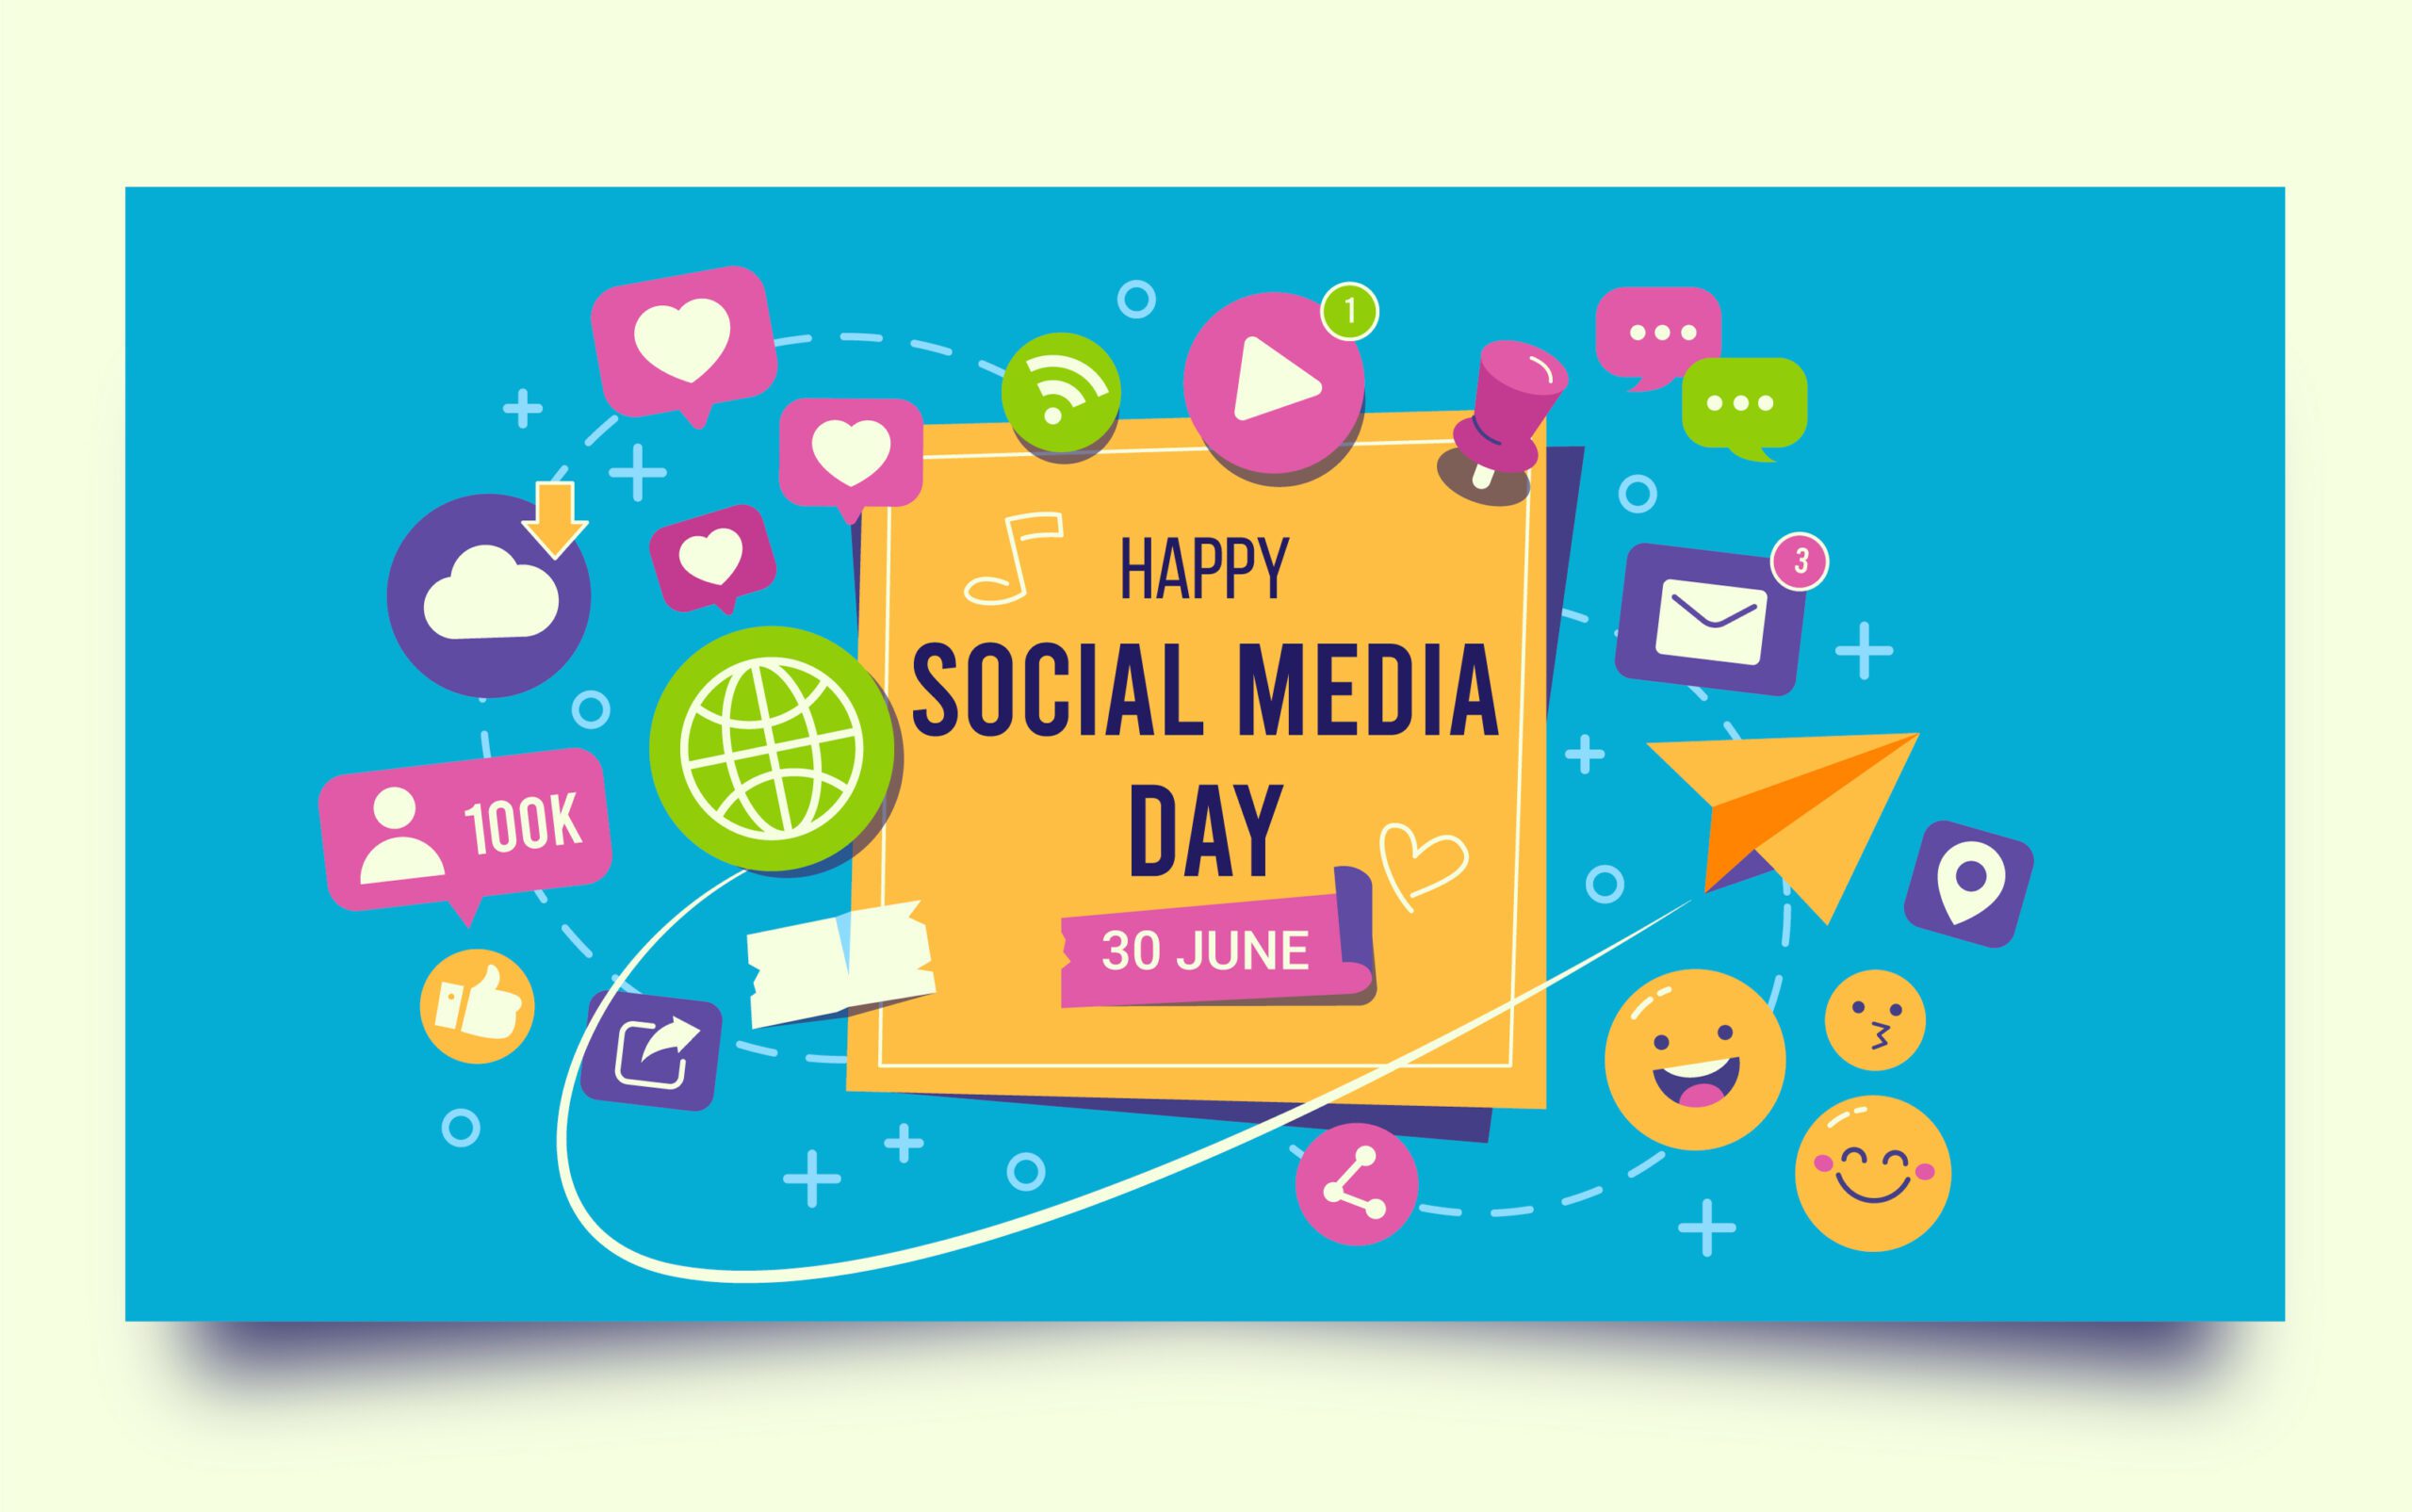 #SocialMediaDay #SocialMediaMarketing #DigitalMarketing #SocialMediaStrategy #SocialMediaTips #SocialMediaManagement #SocialMediaTrends #SocialMediaEngagement #SocialMediaCampaigns #SocialMediaInfluence #SocialMediaSuccess #SocialMediaMetrics #SocialMediaContent #SocialMediaAdvertising #SocialMediaAnalytics